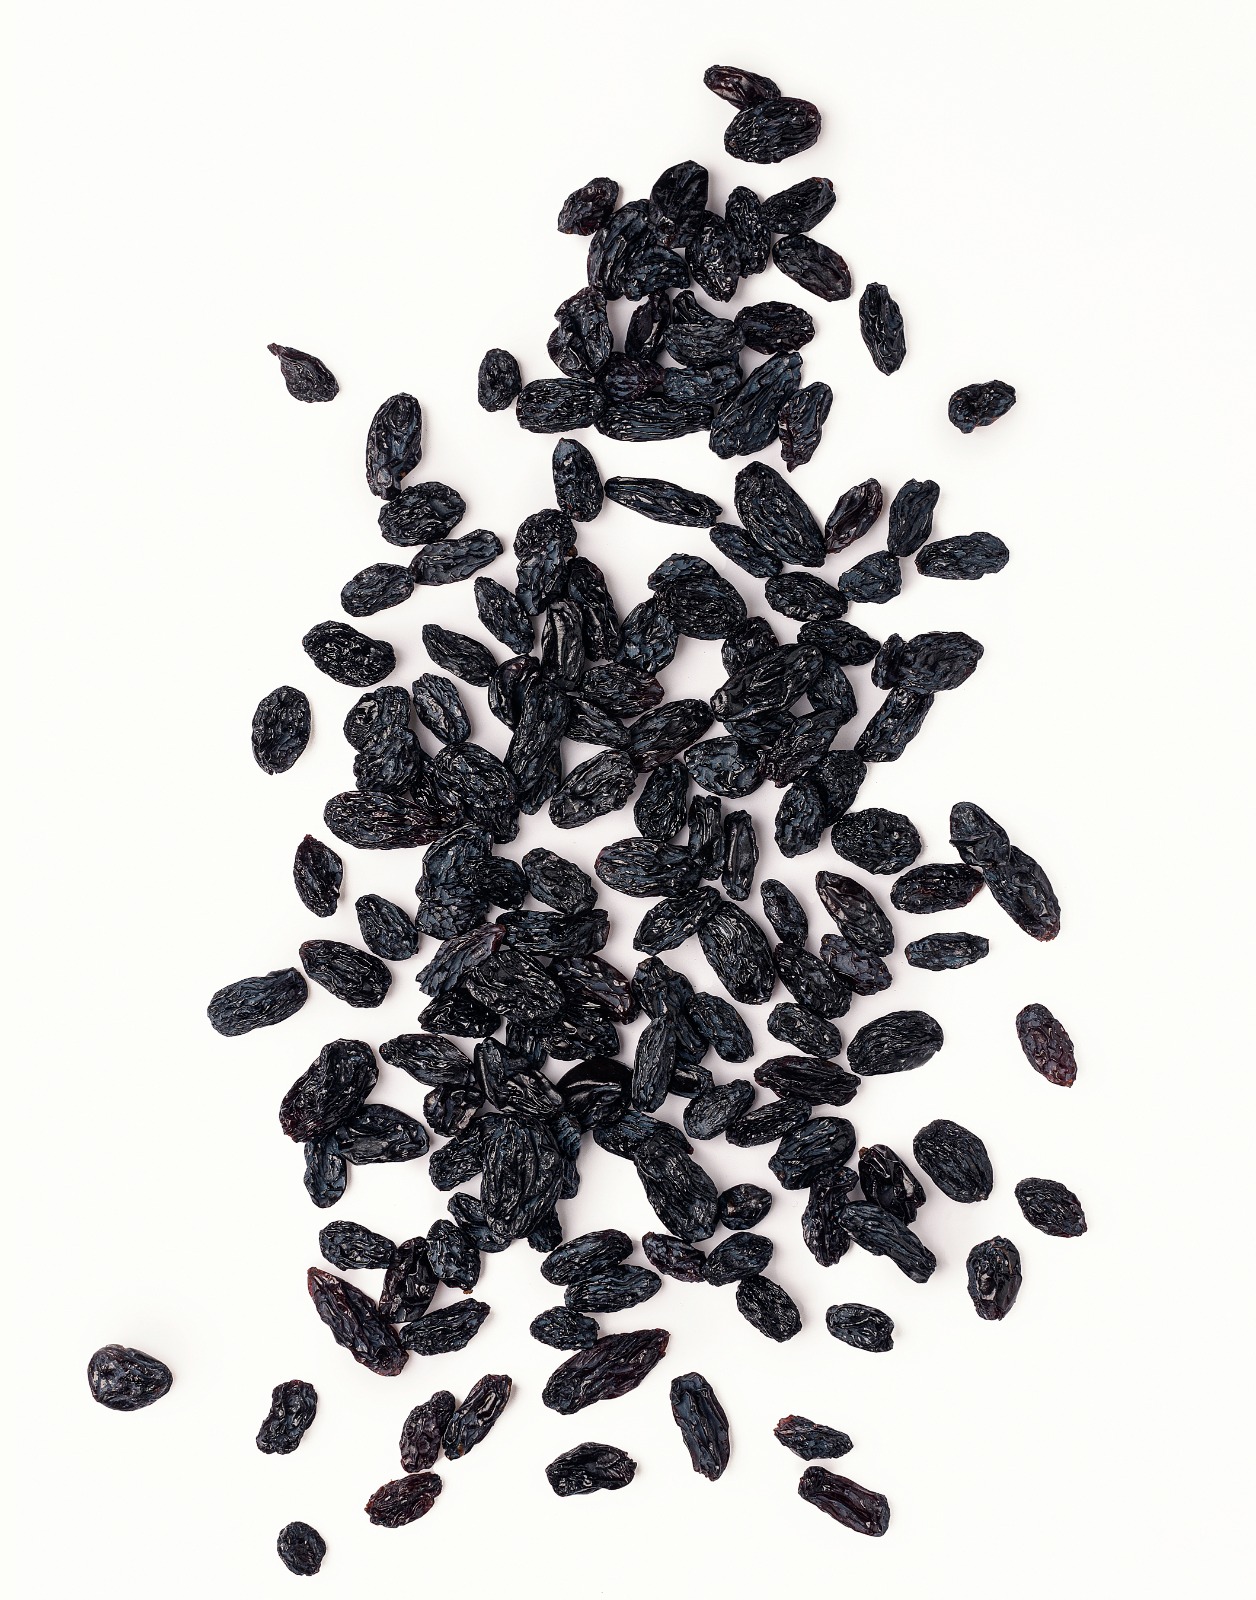 Black Georgian Raisins 500gr.